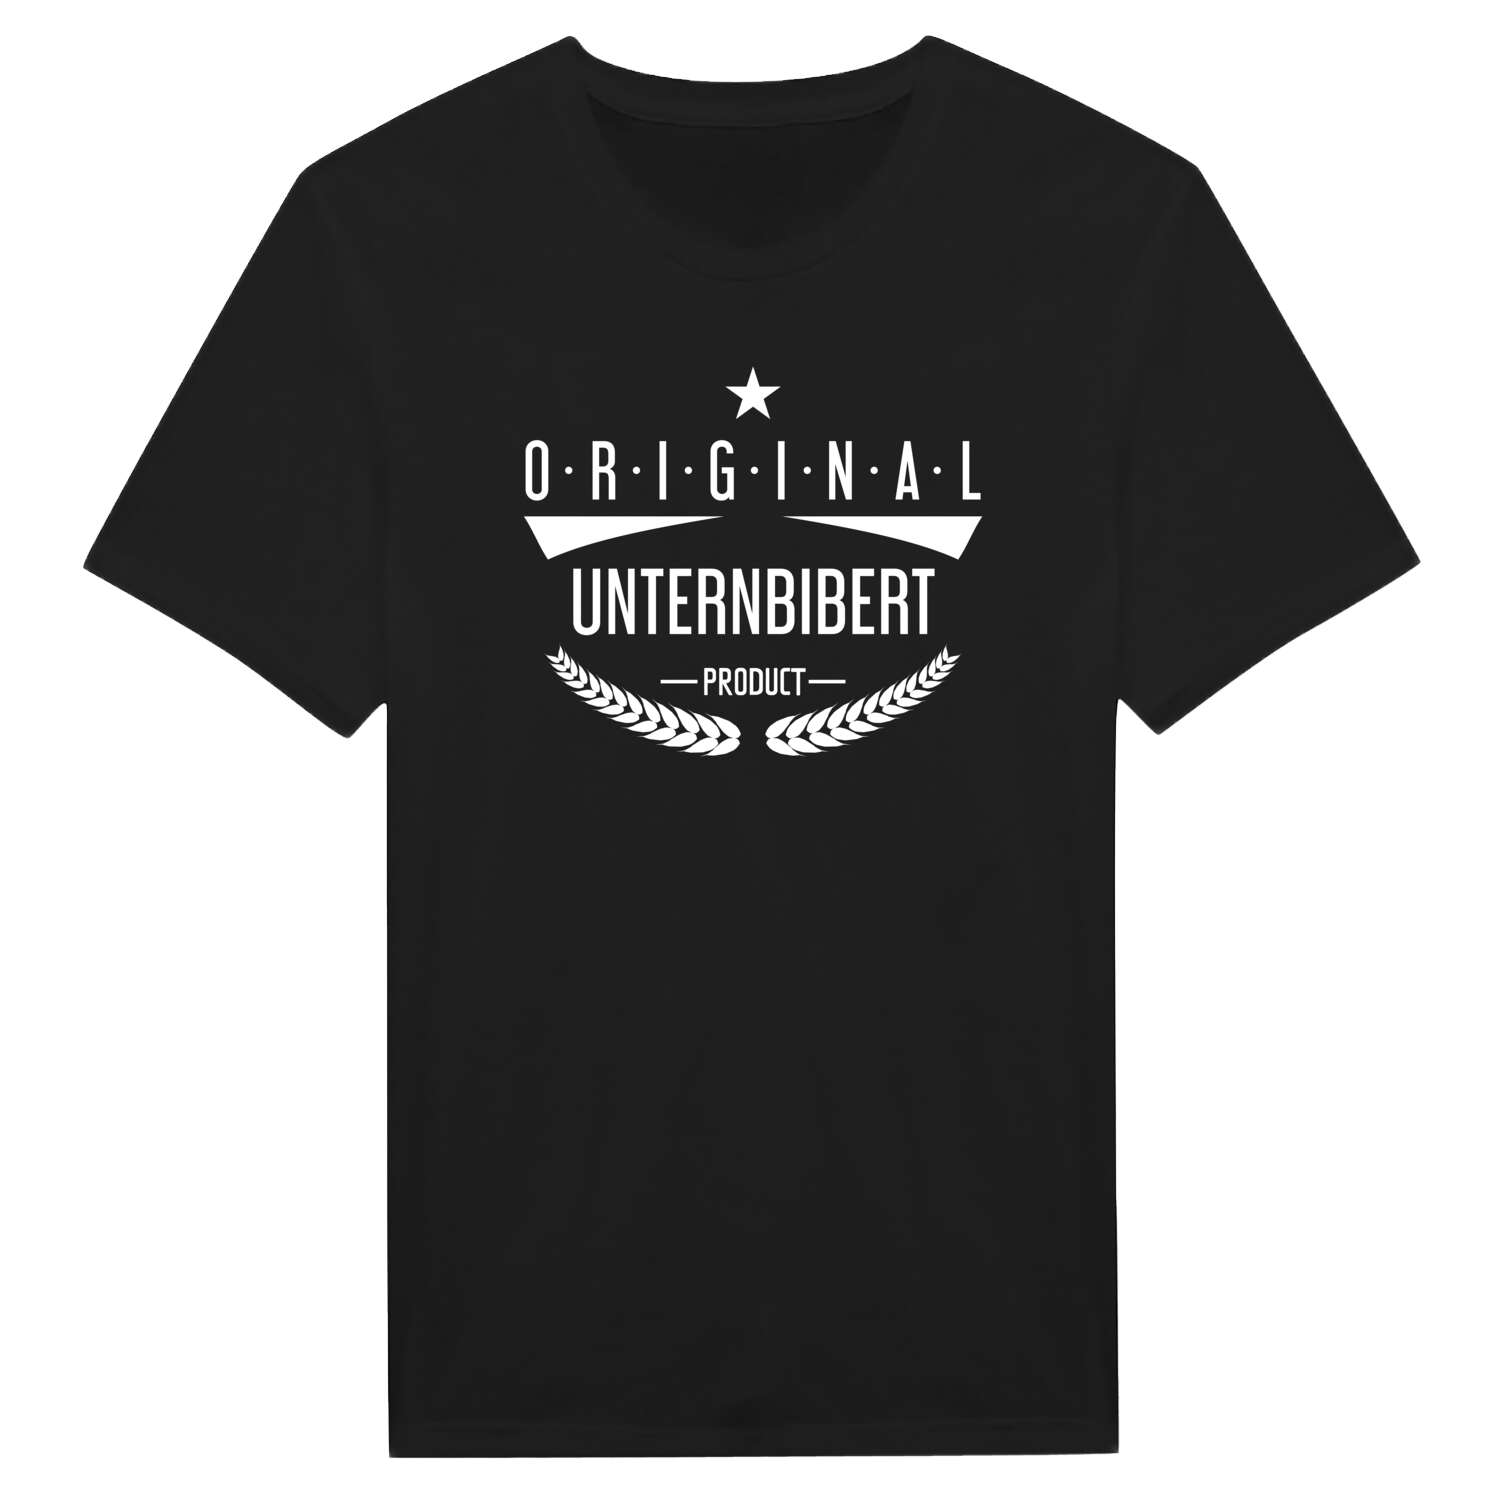 Unternbibert T-Shirt »Original Product«